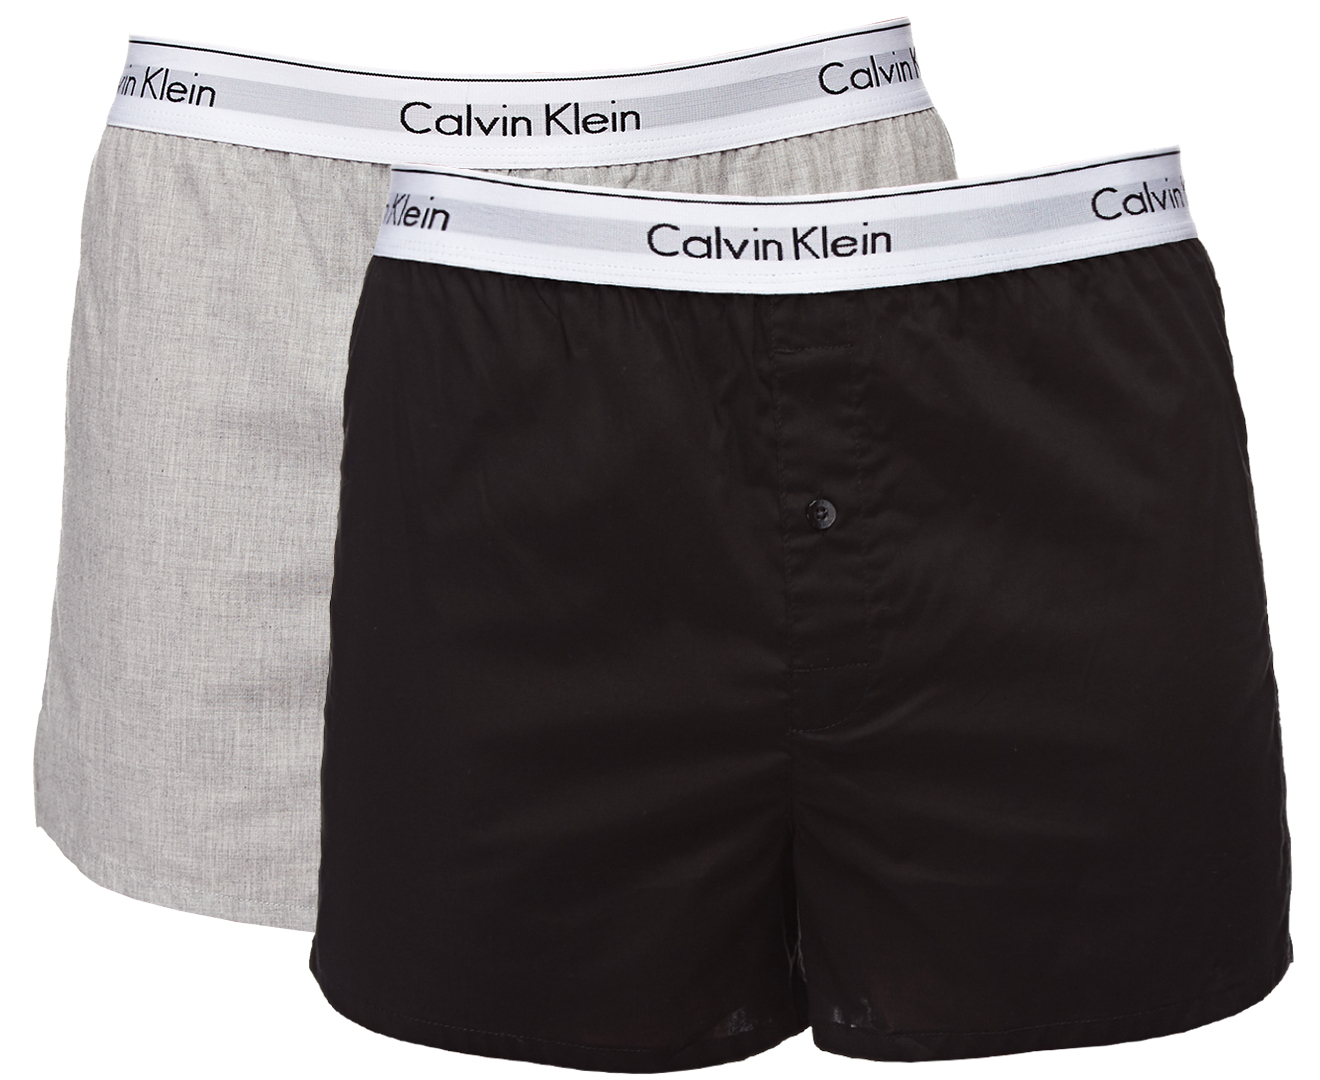 Calvin Klein Men's Modern Cotton Stretch Slim Fit Boxers 2-Pack - Black